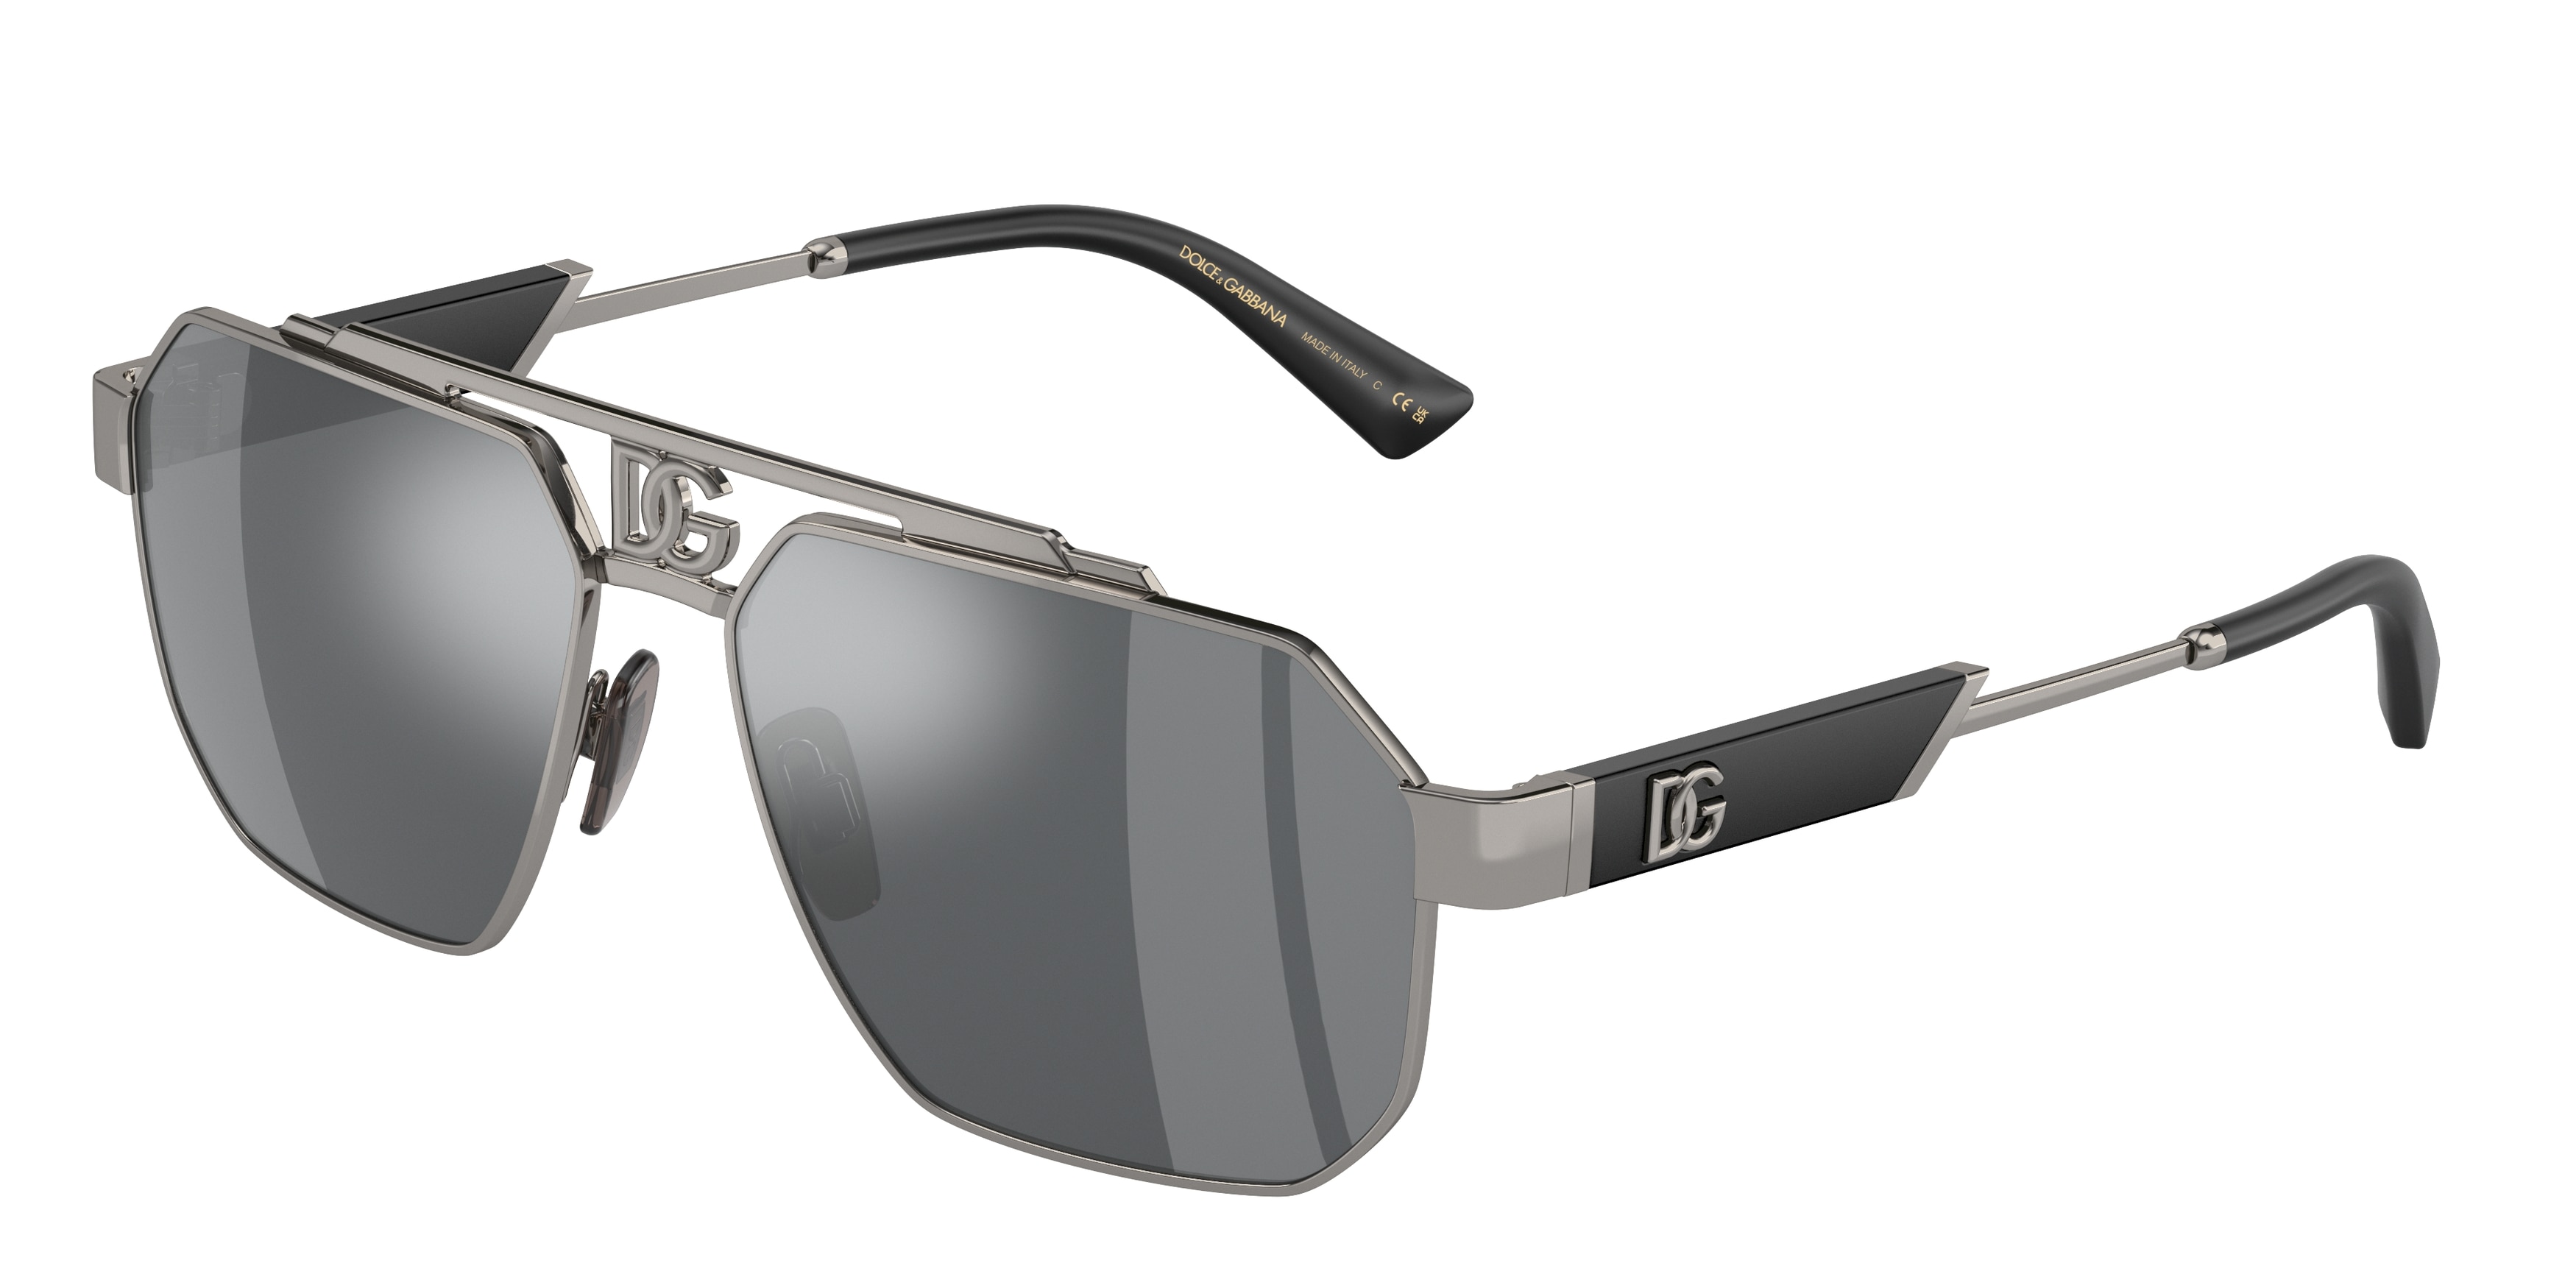 Dolce&Gabbana DG4406 54 Grey Gradient & Black Sunglasses